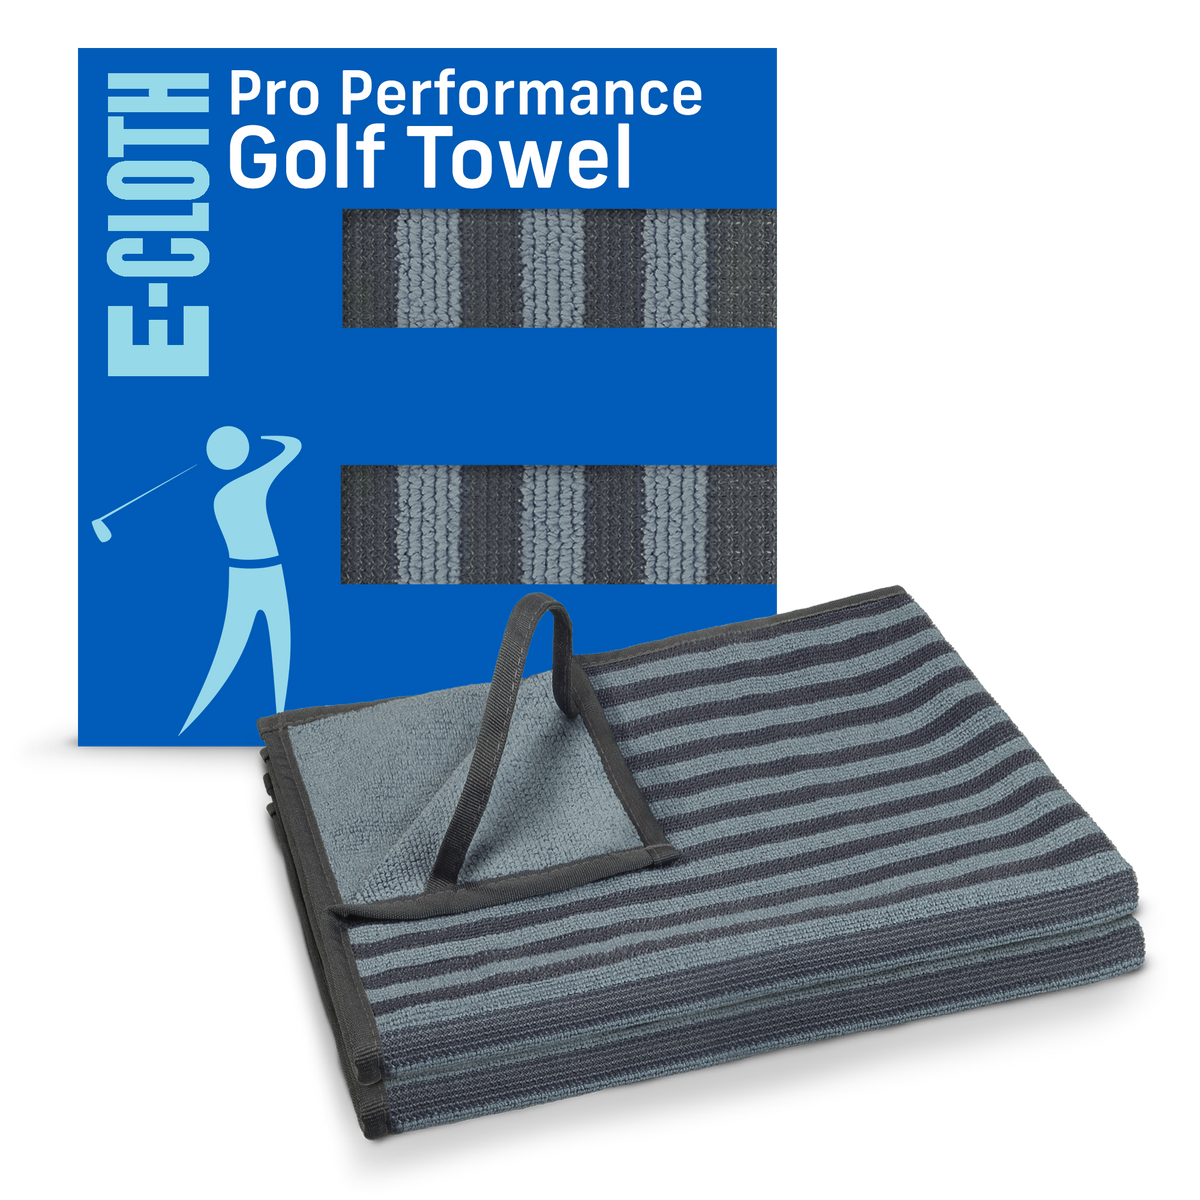 Pro Performance Golf Towel